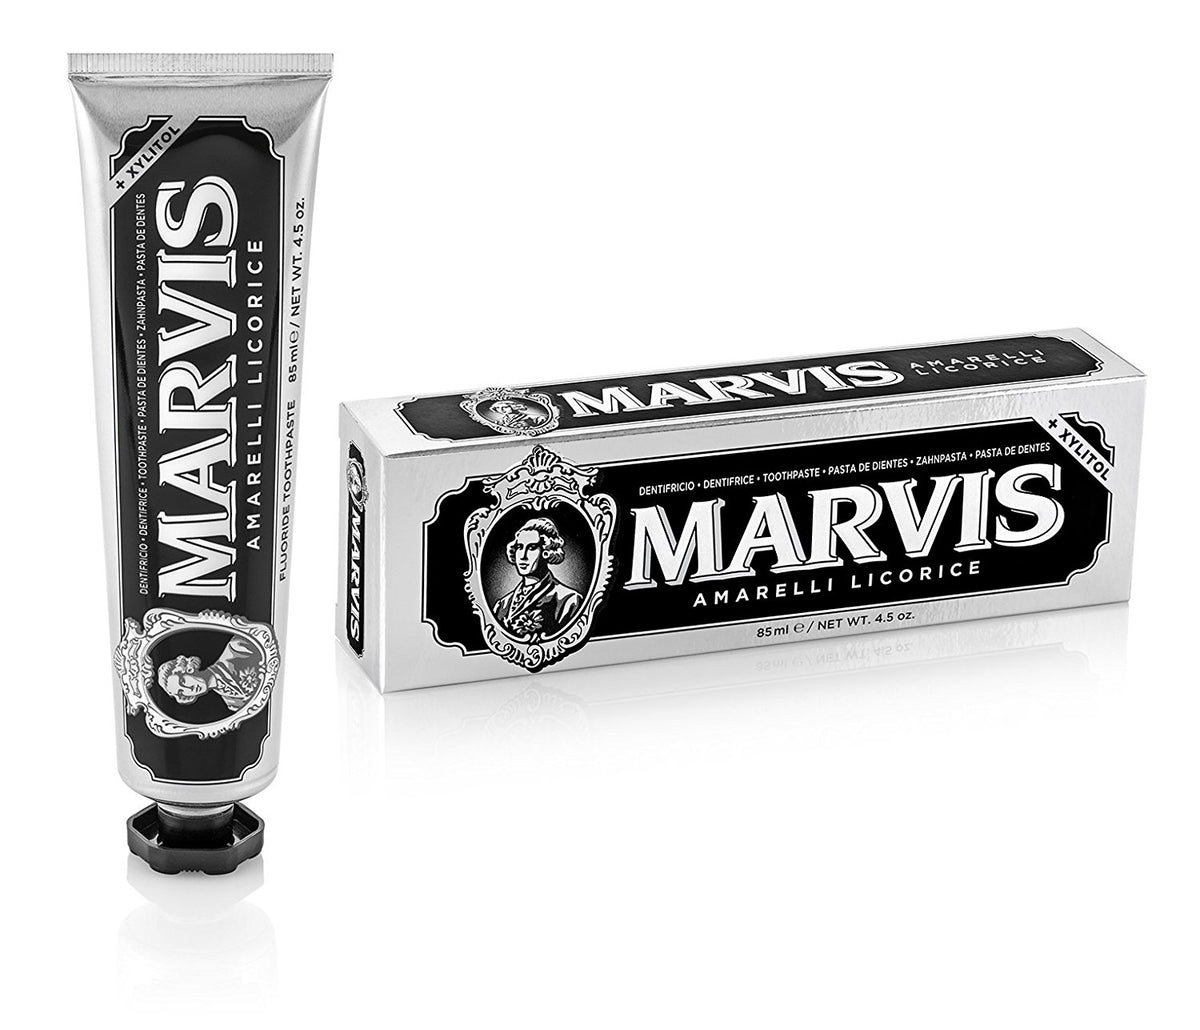 Marvis Amarelli Licorice Toothpaste , Toothpaste, Marvis, Working Title